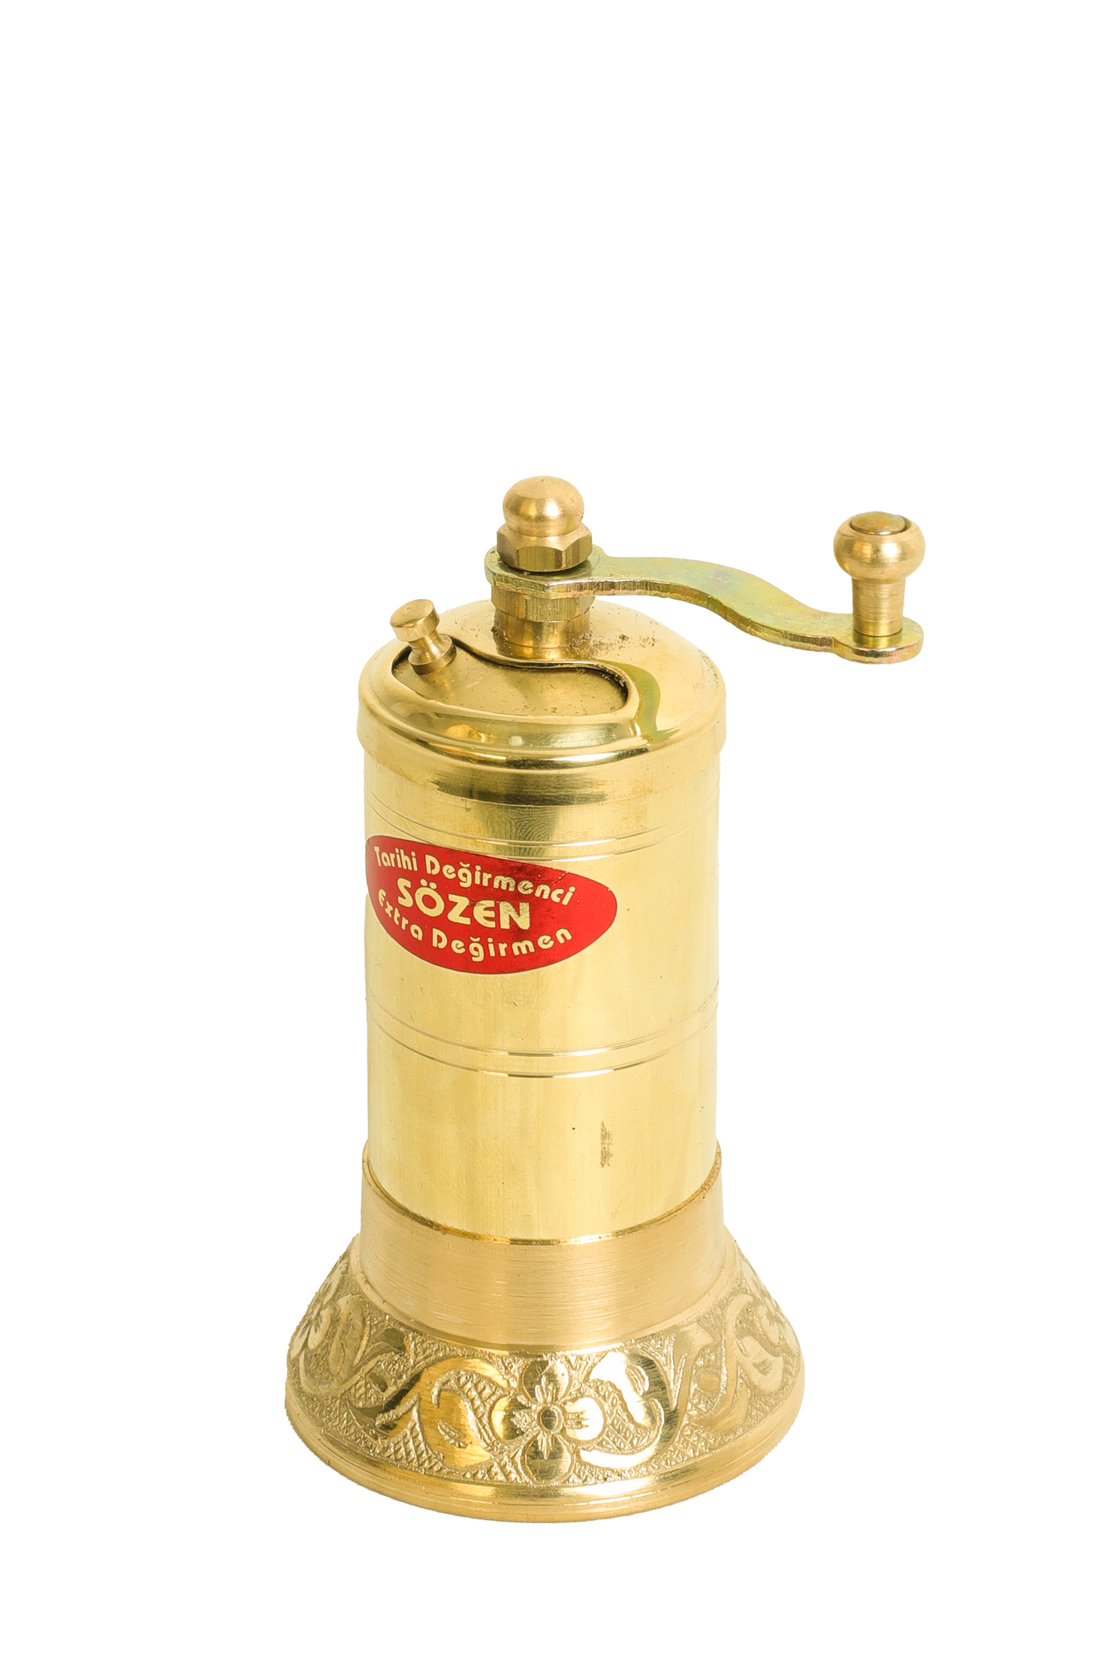 https://www.sozengrinders.com/sozen-brass-pepper-grinder-mill-11-cm-450-in-plain-brass-pepper-grinders-sozen-138-45-B.jpg